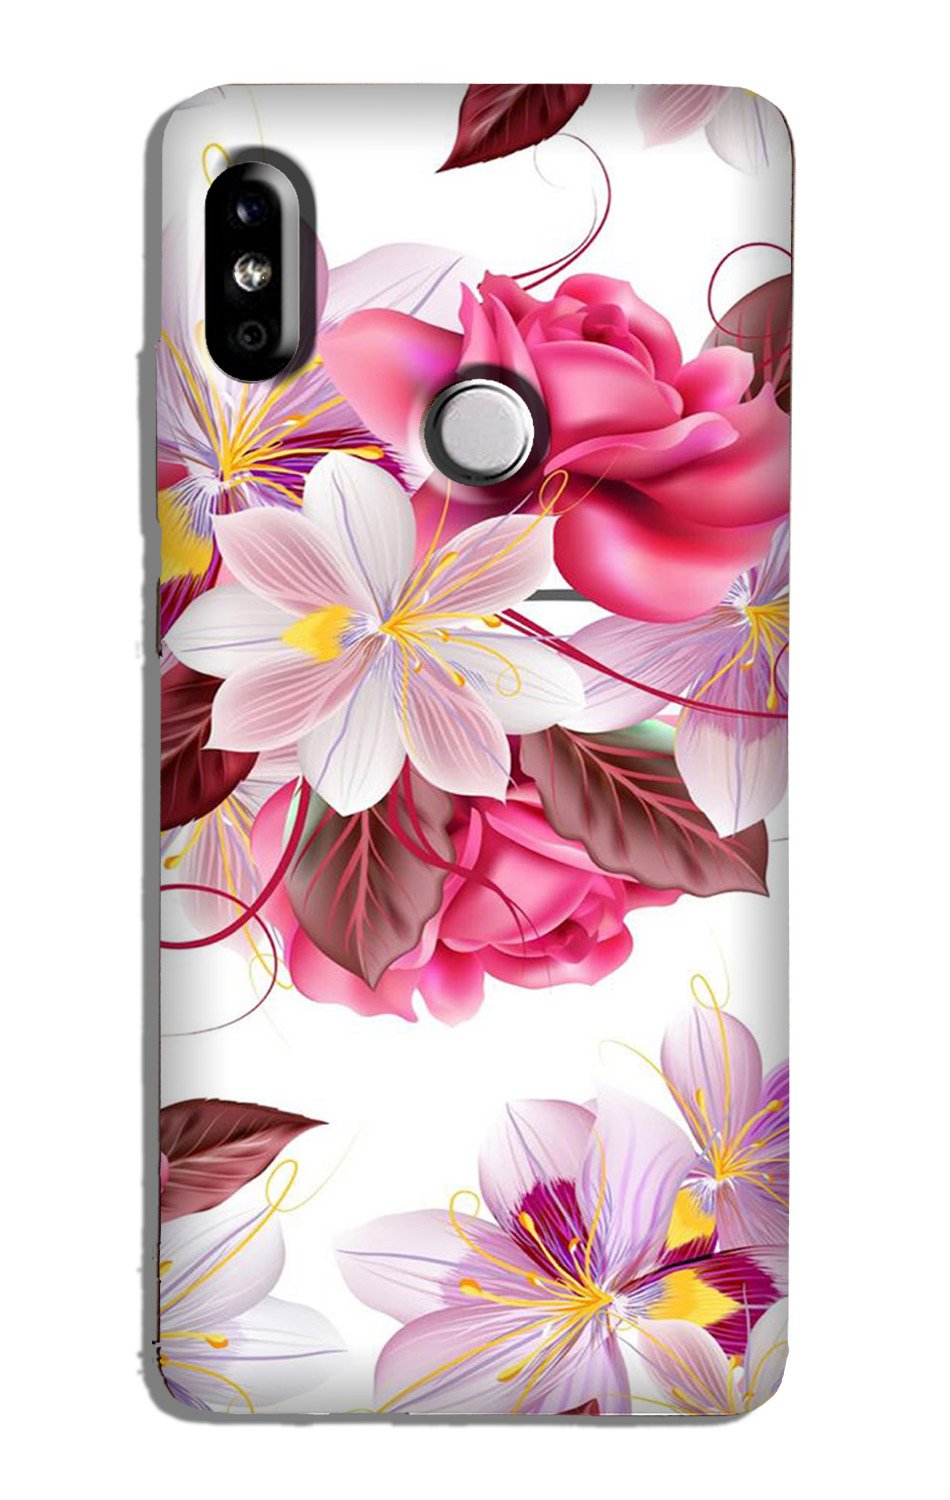 Beautiful flowers Case for Xiaomi Redmi 7